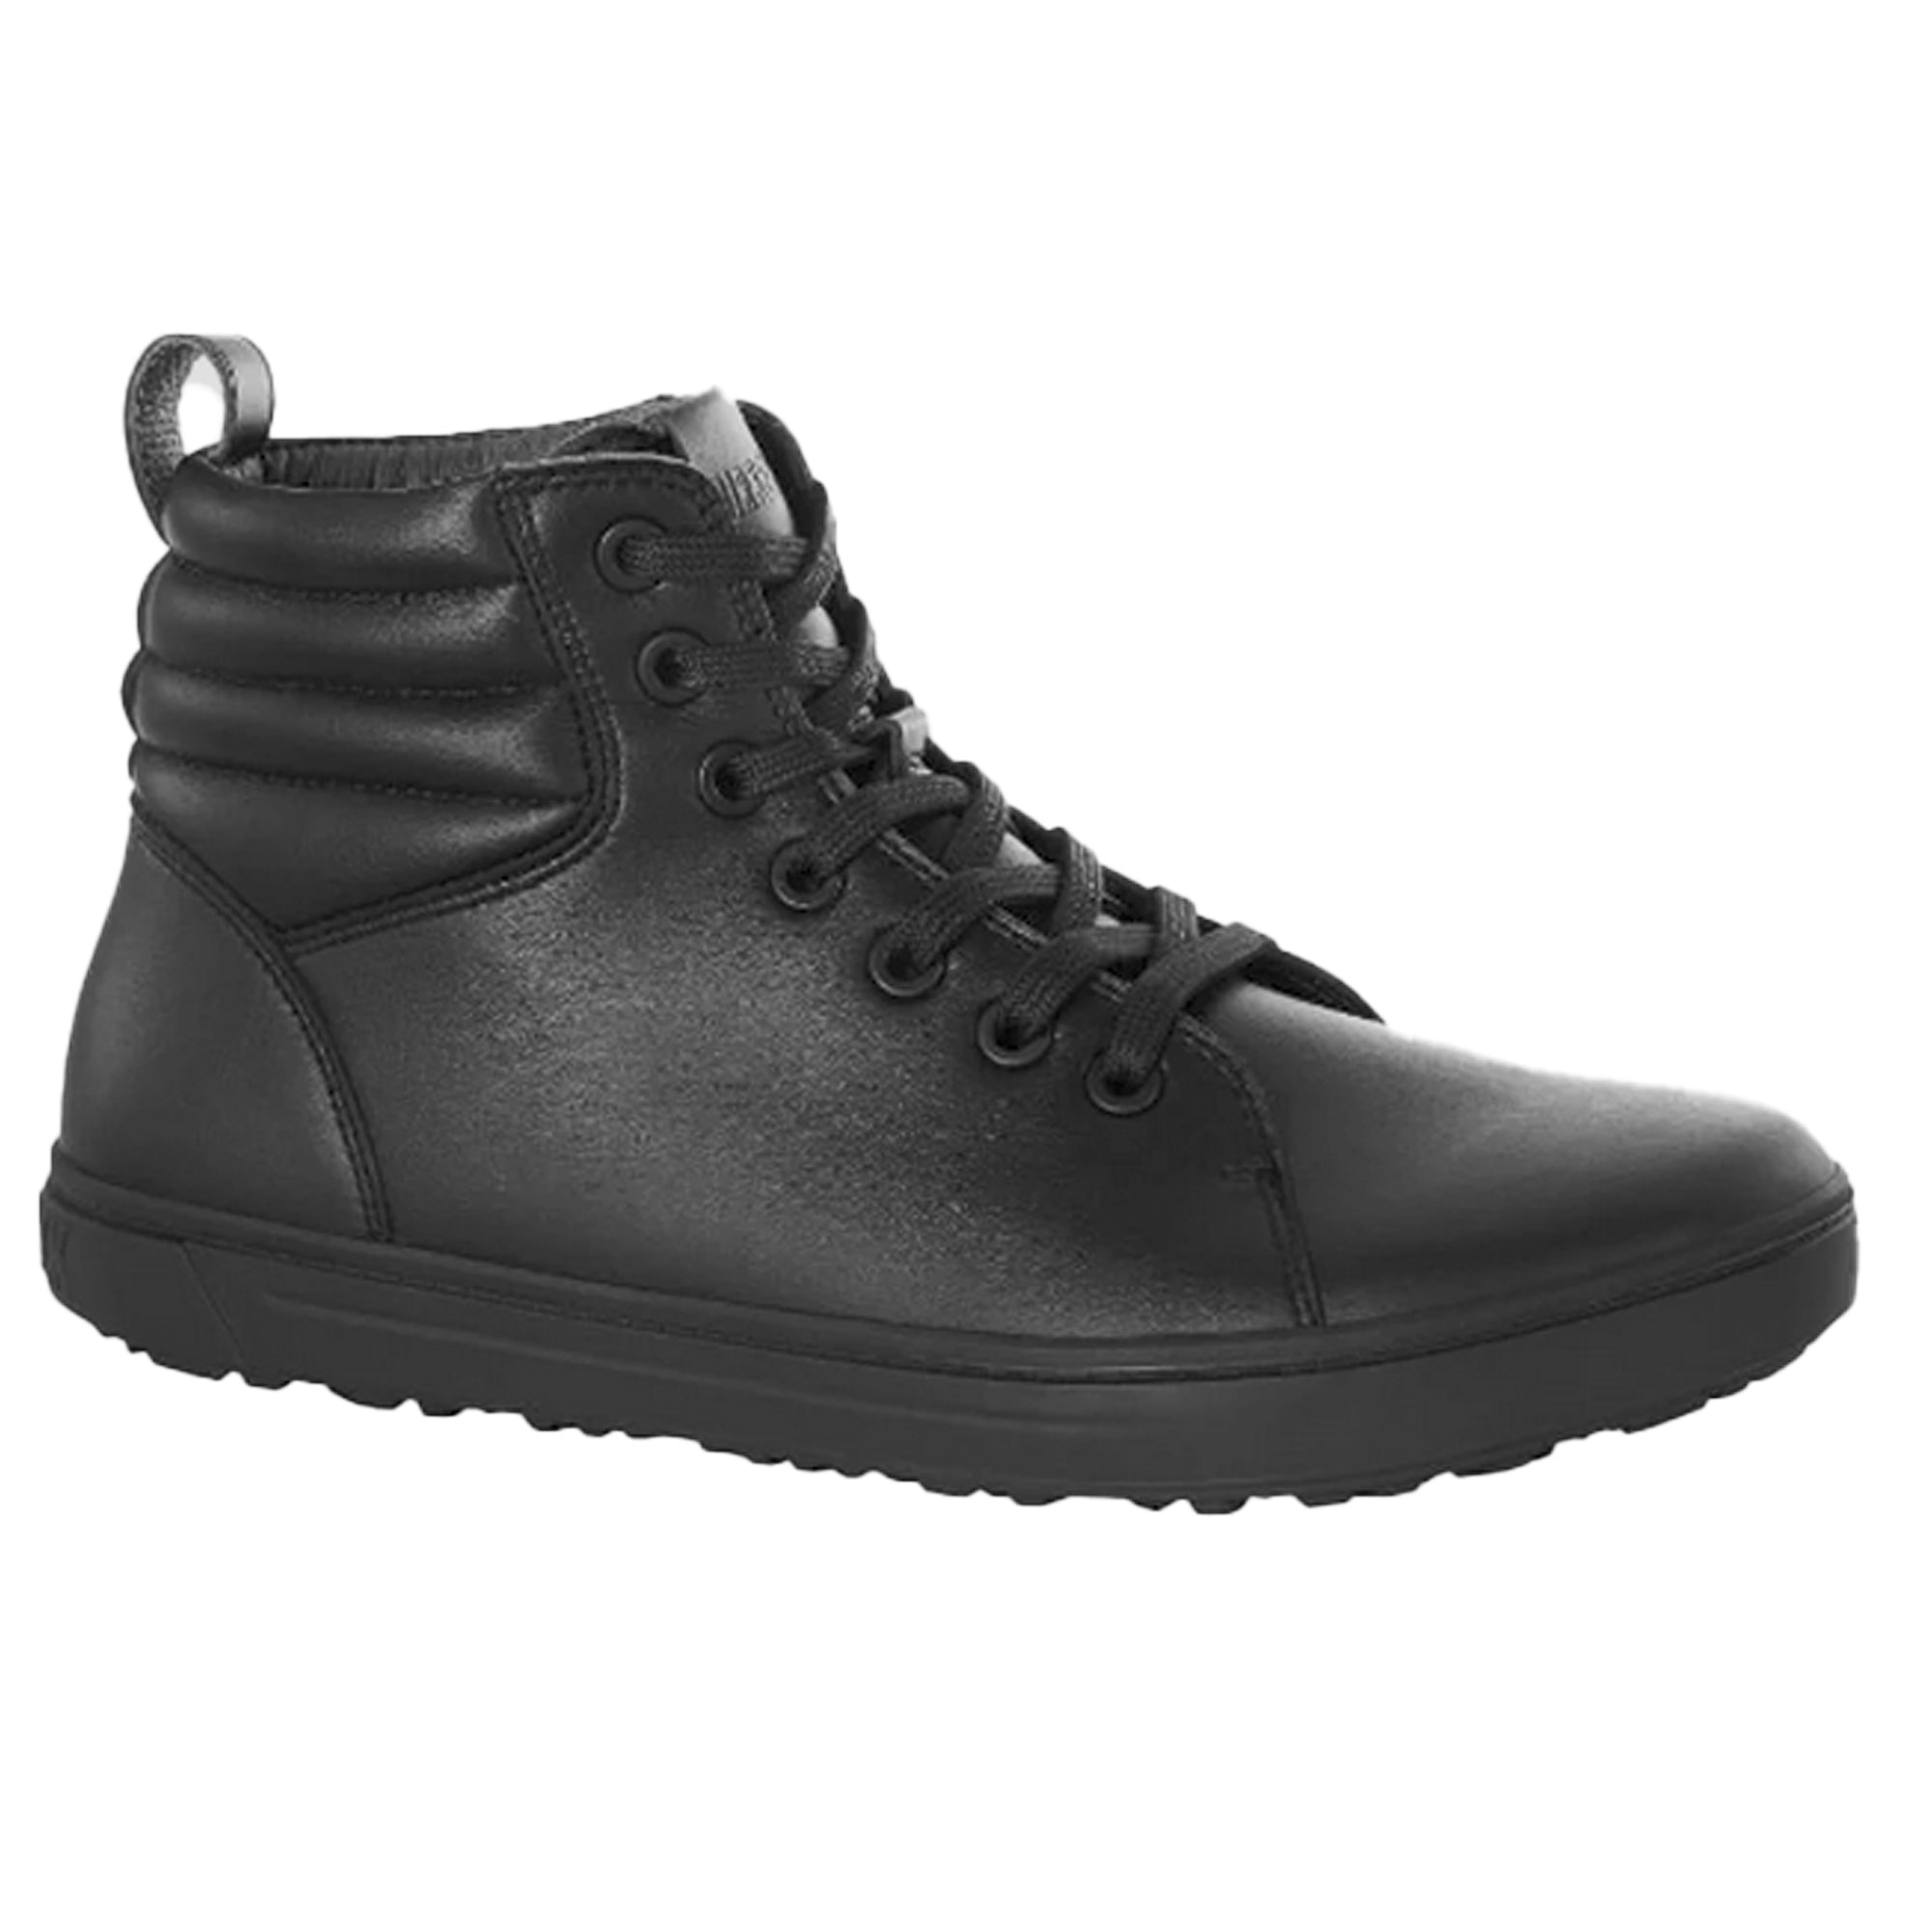 Birkenstock QO700 QO 700 Leather Boots Work Shoes Professional Sneakers NEW